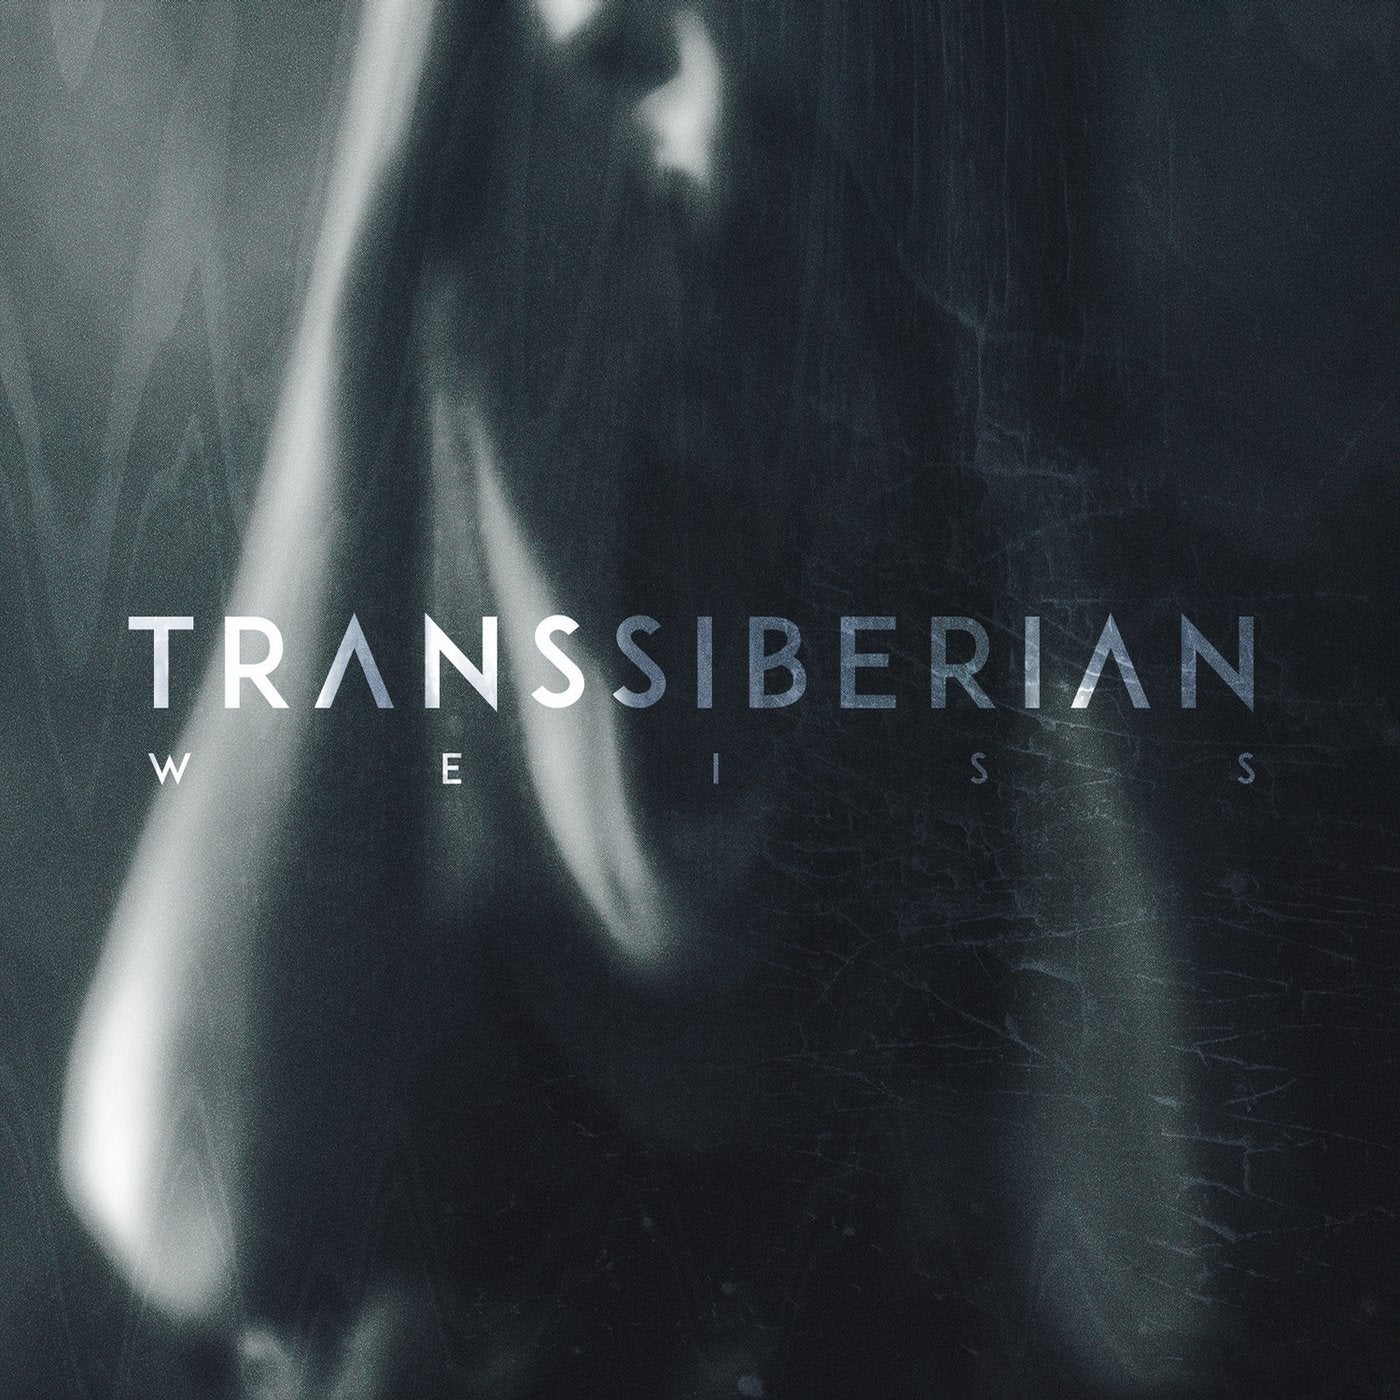 The Transsiberian